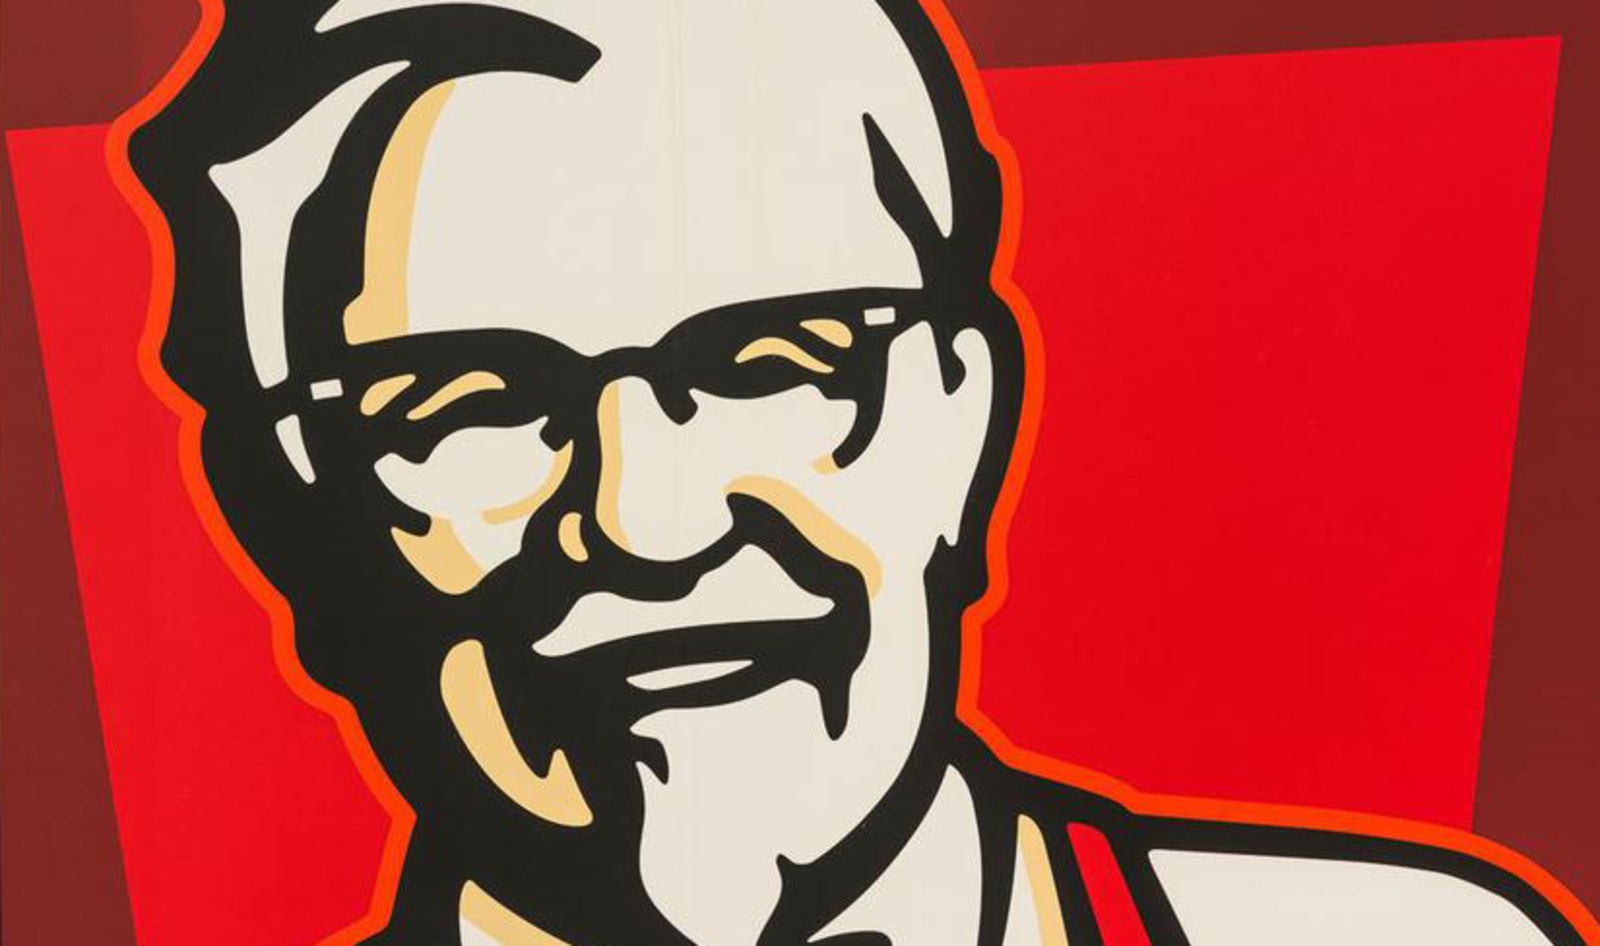 KFC Reassures Disgruntled Customer That Bloody Chicken is “Natural”